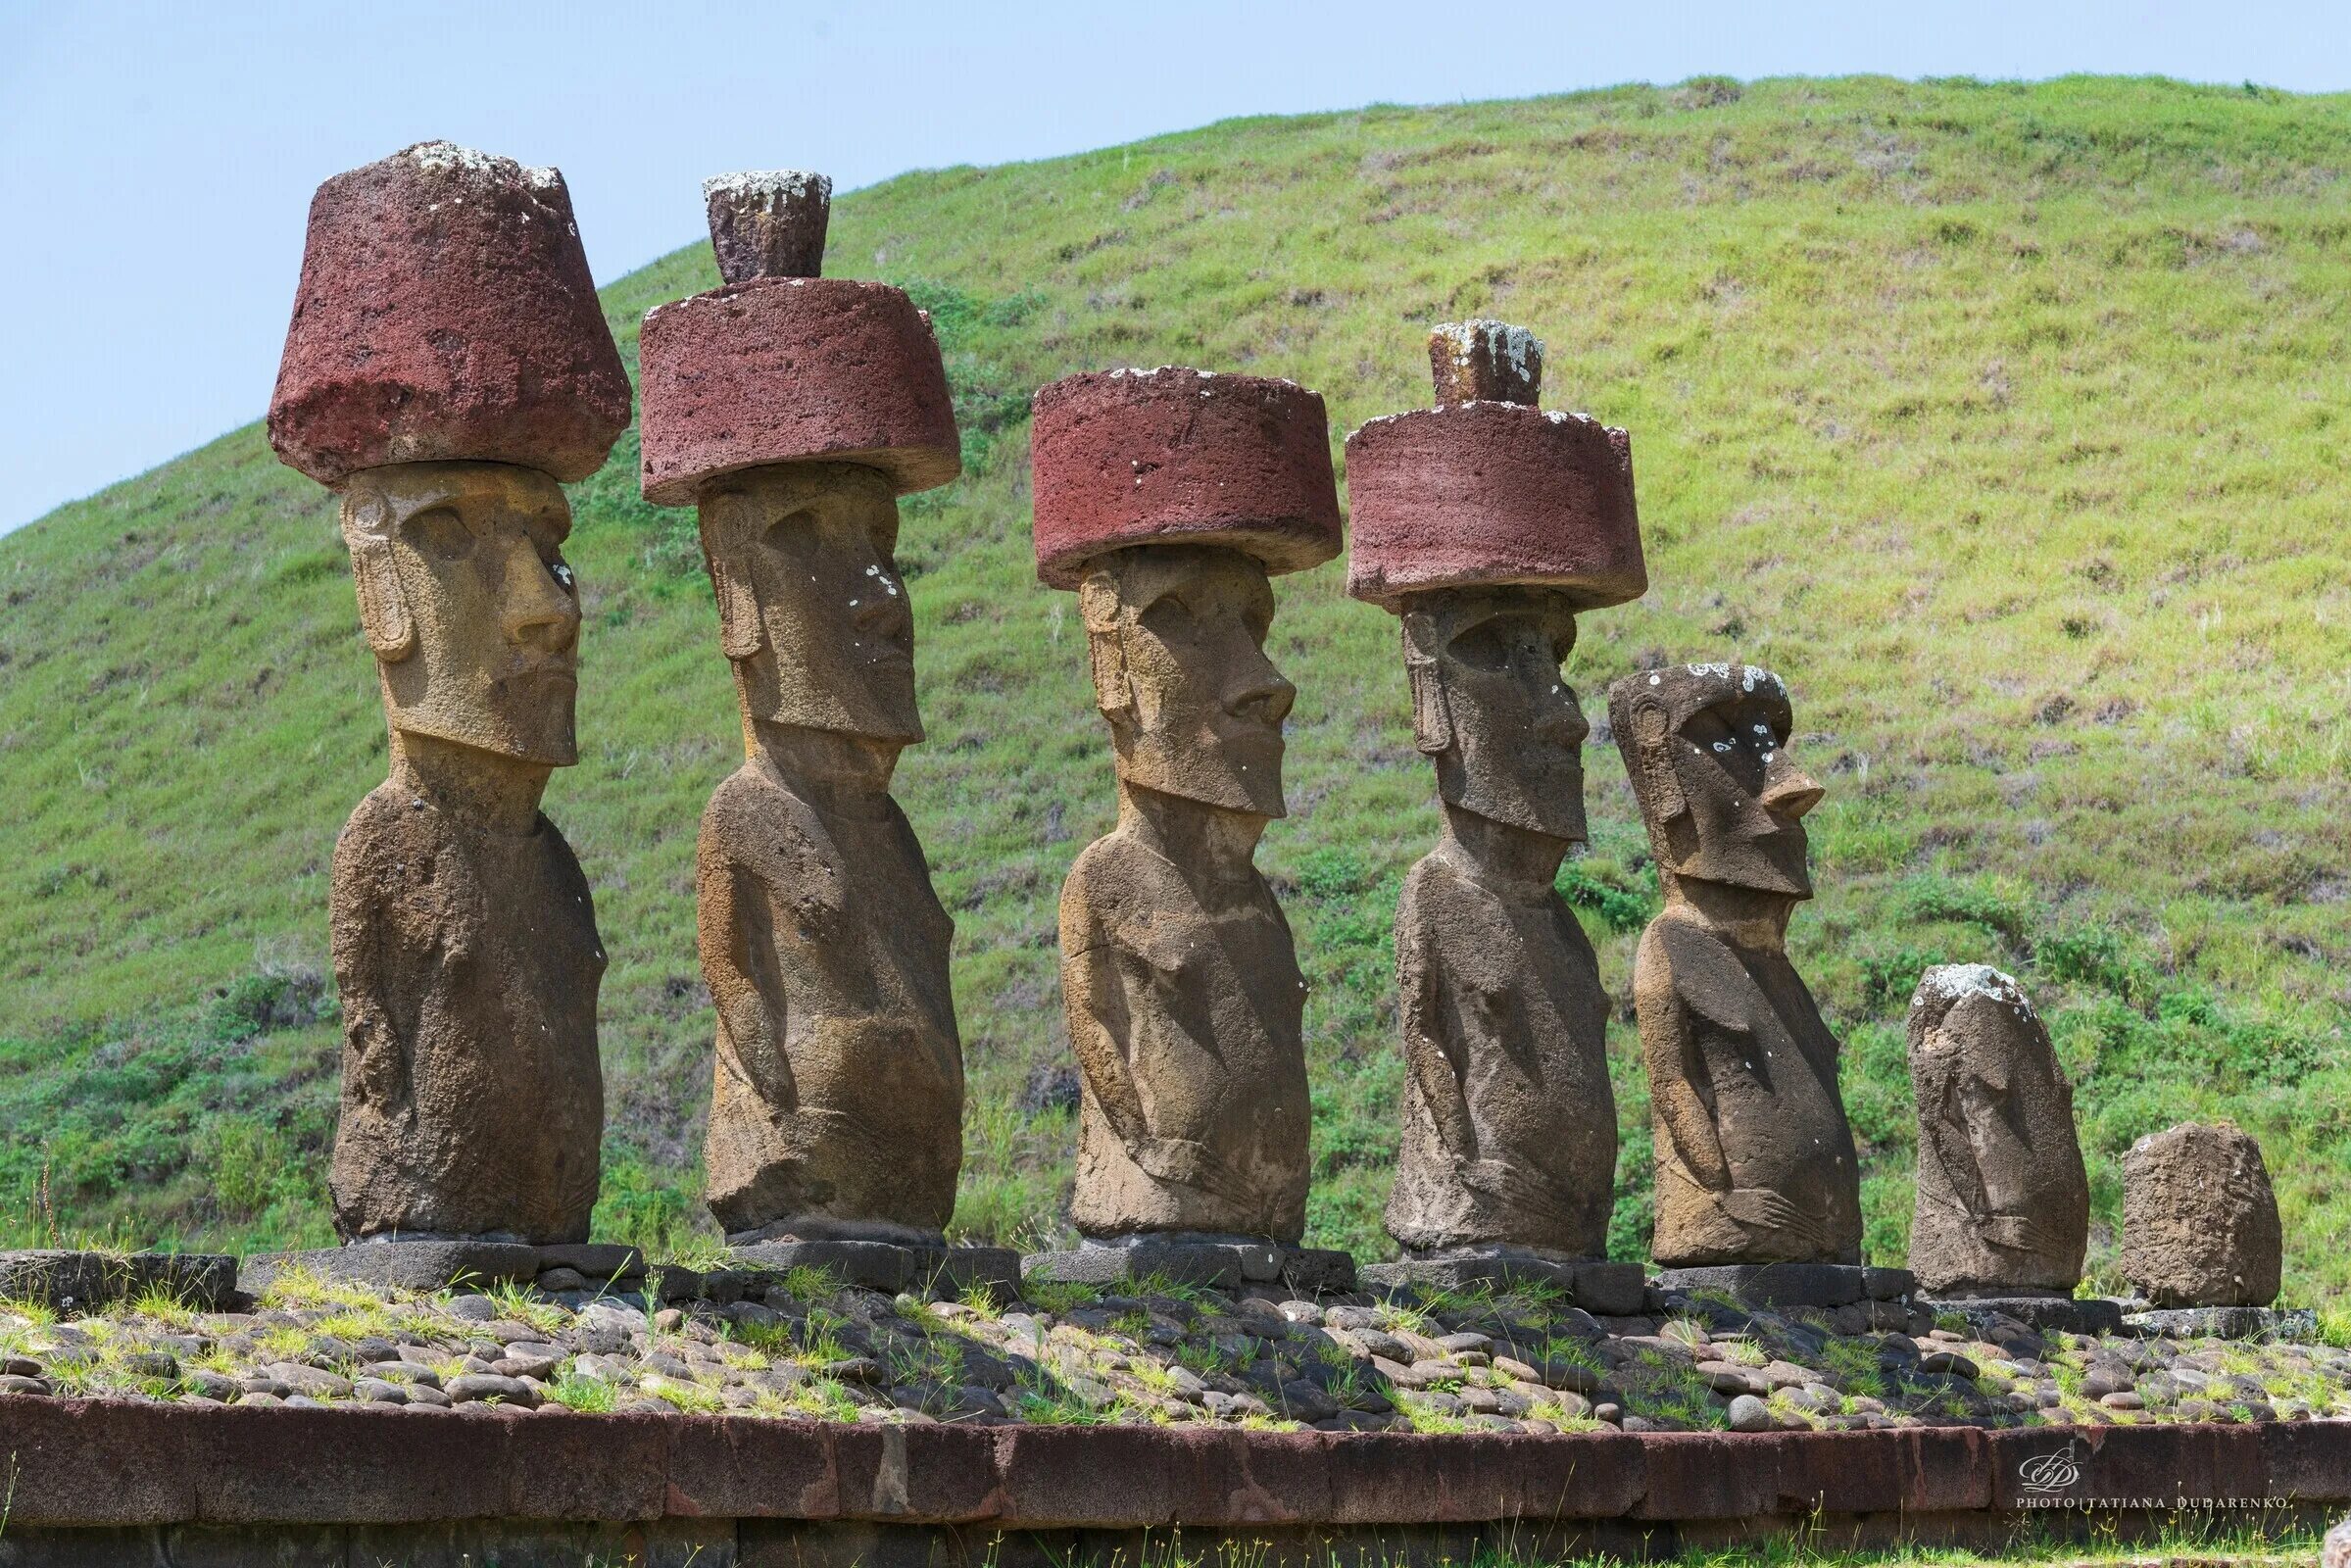 Статуи на острове. Остров Пасхи статуи Моаи. Памятники Моаи на острове Пасхи. Каменные идолы острова Пасхи. Чили остров Пасхи, Чили Моаи.